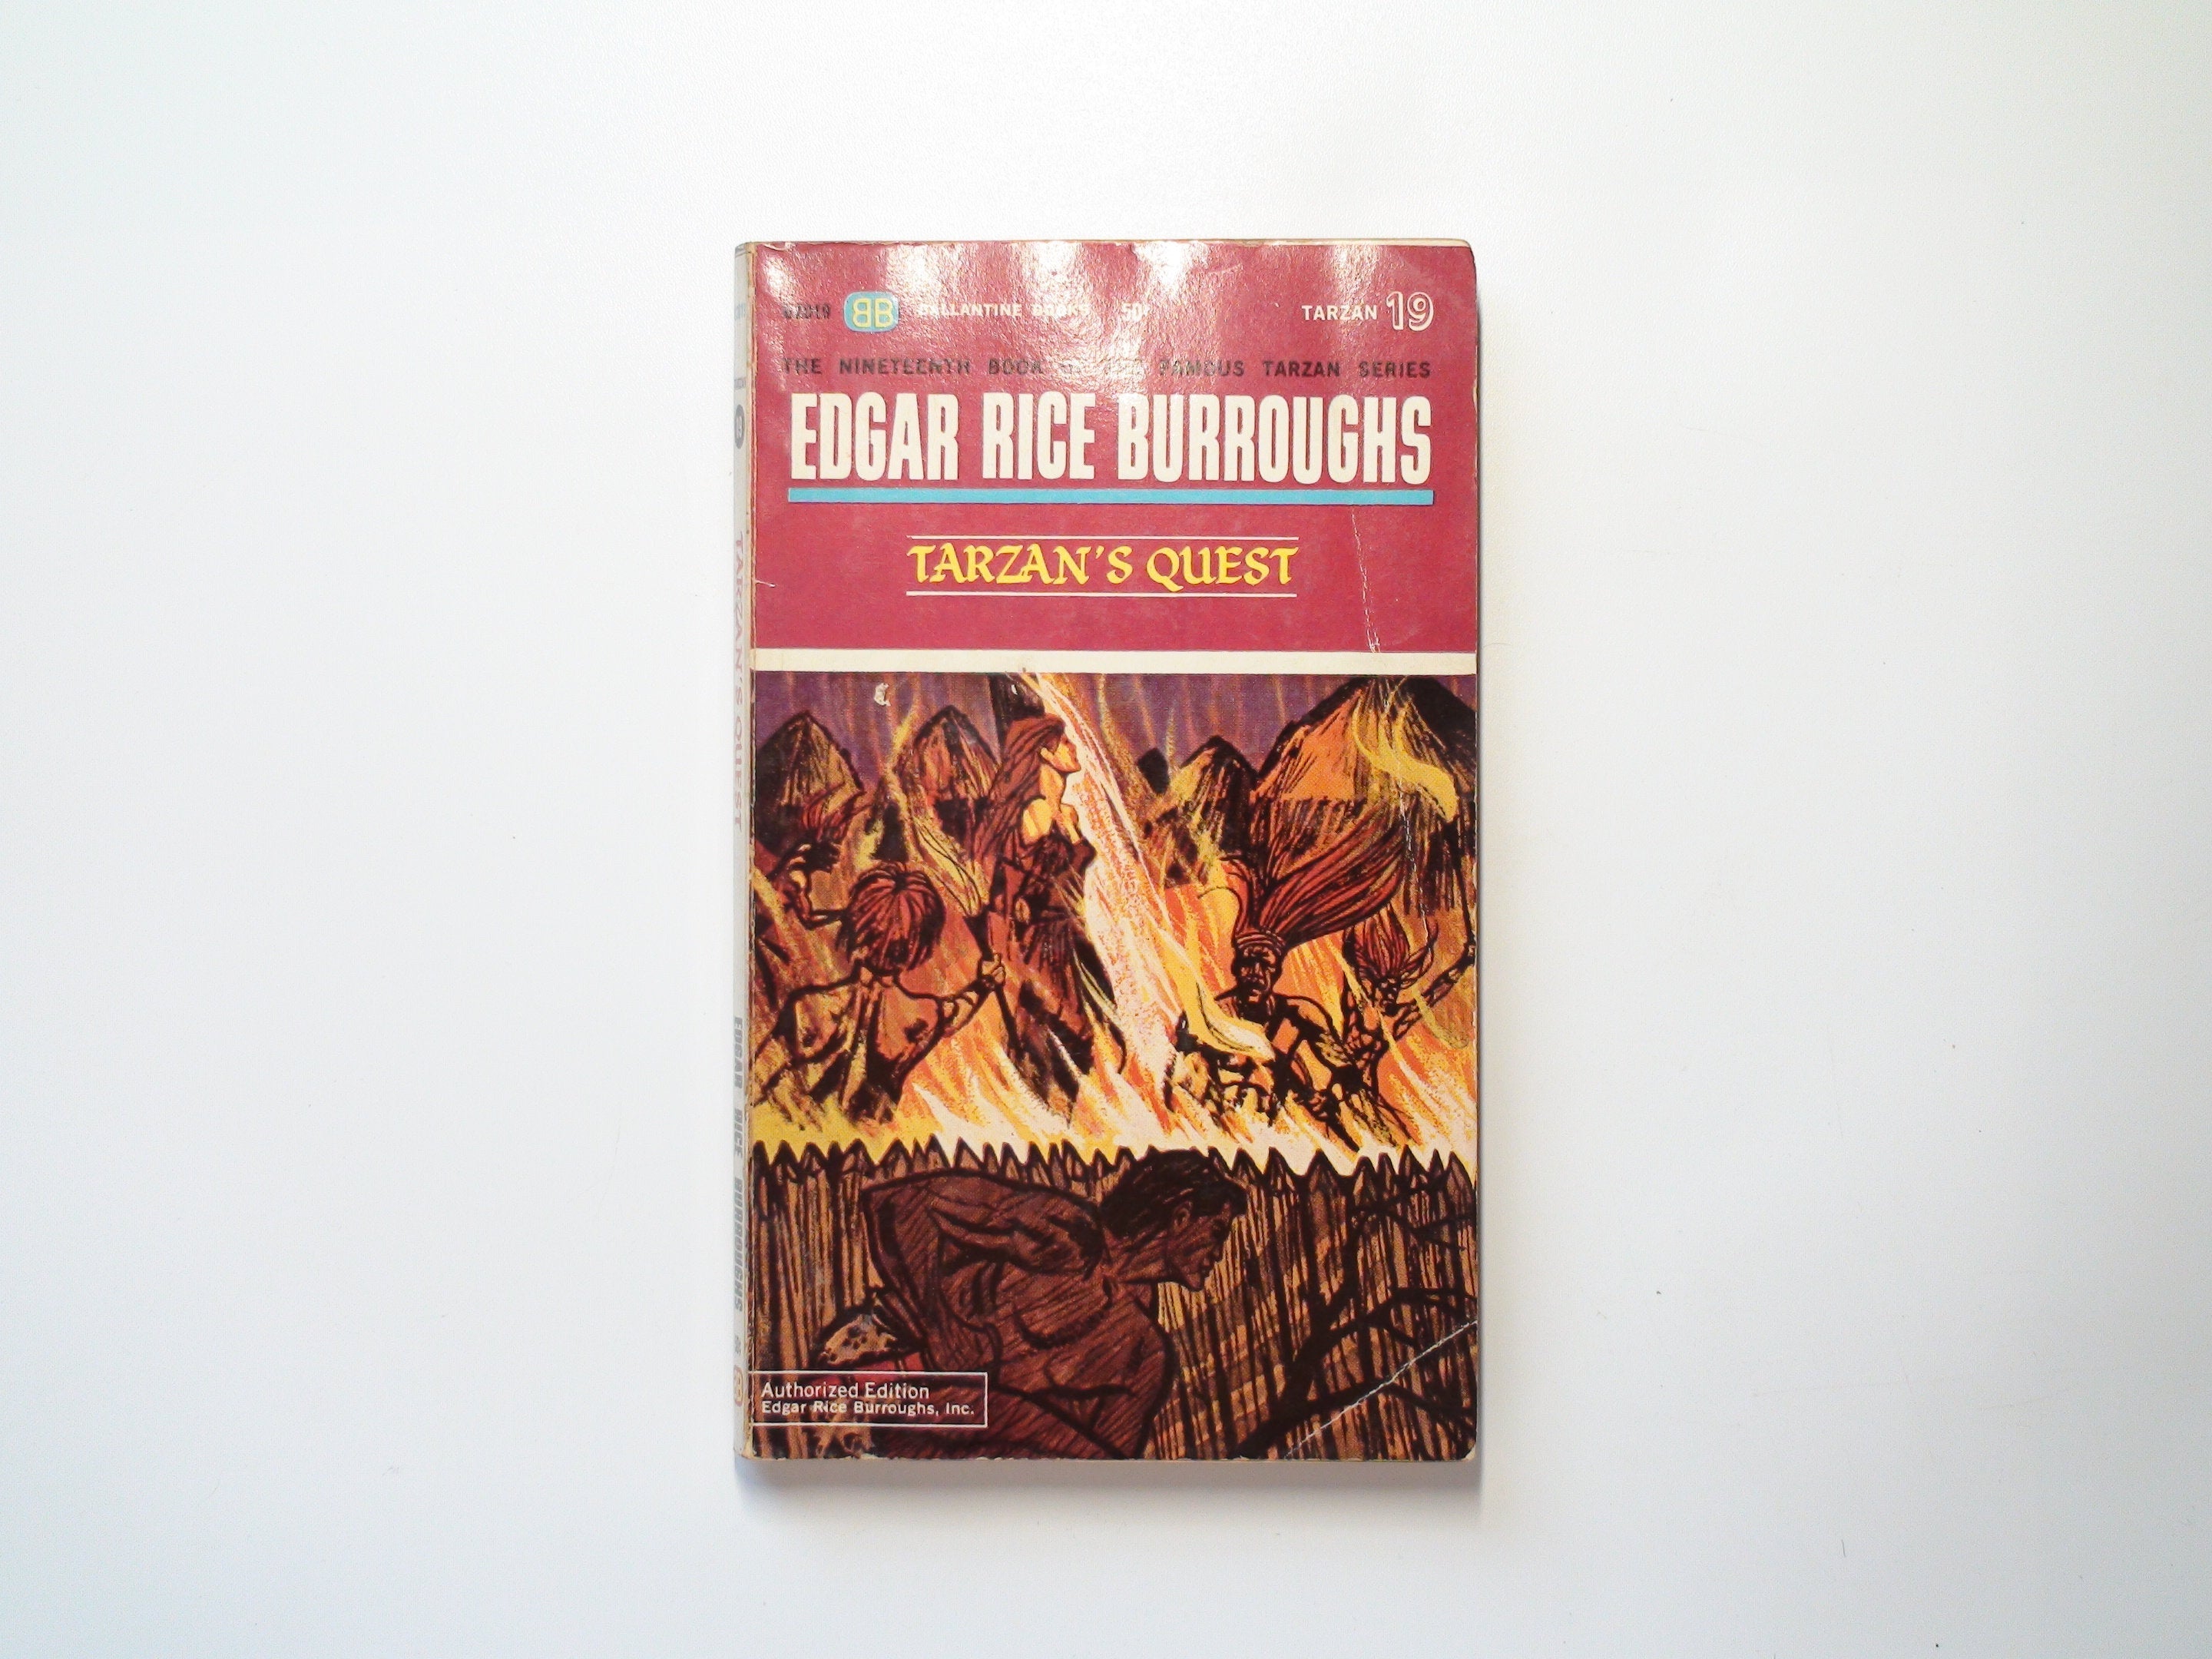 Tarzan's Quest, by Edgar Rice Burroughs, Vintage Paperback, 1964